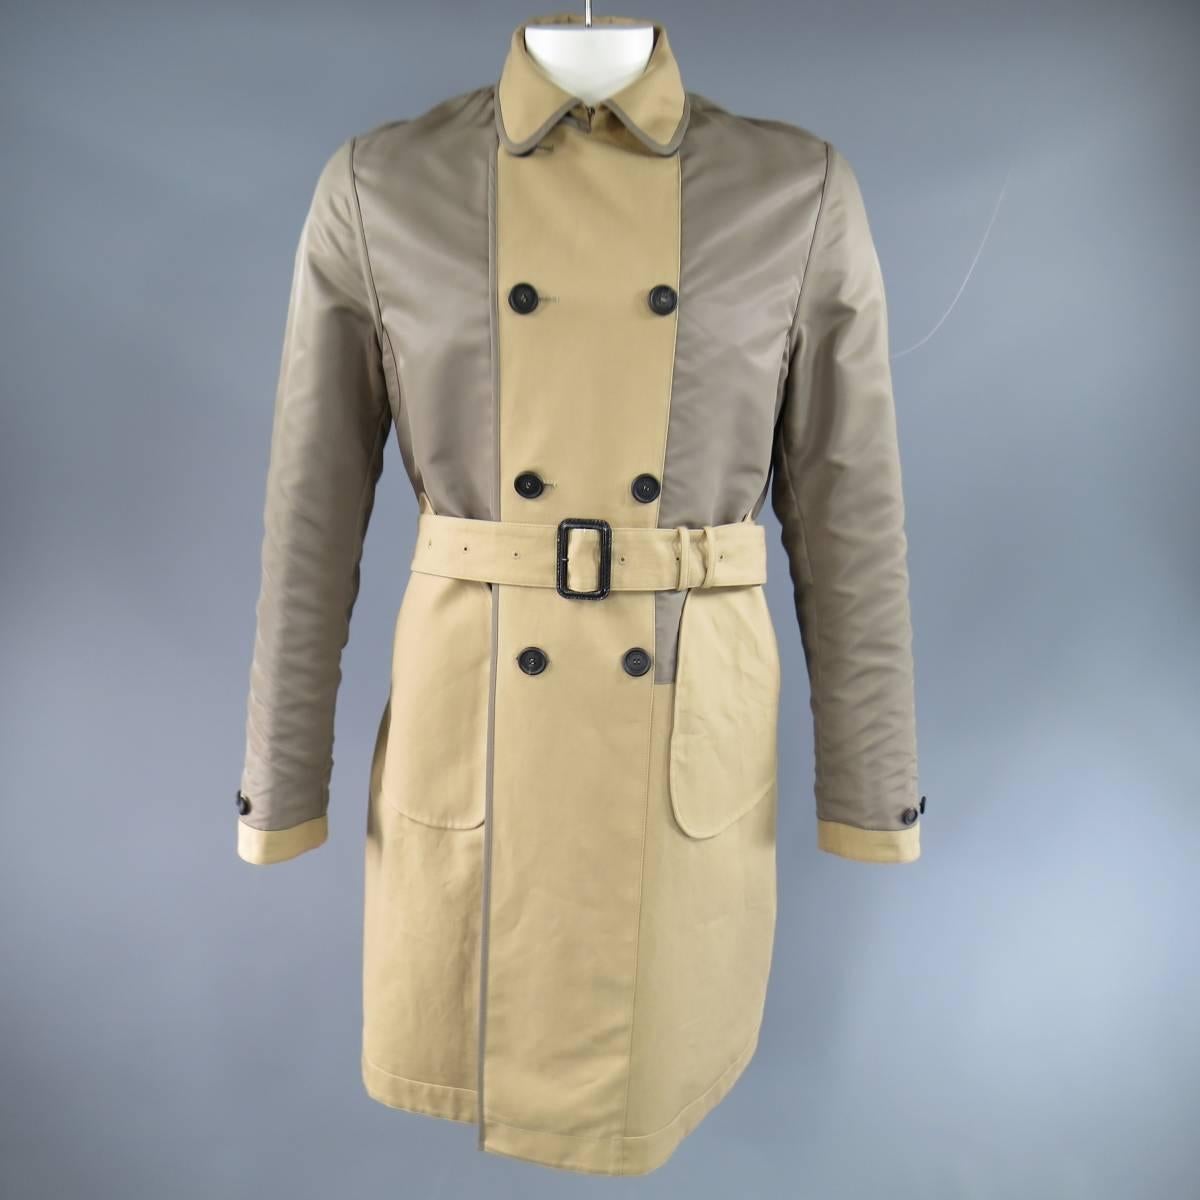 burberry prorsum trench coat mens